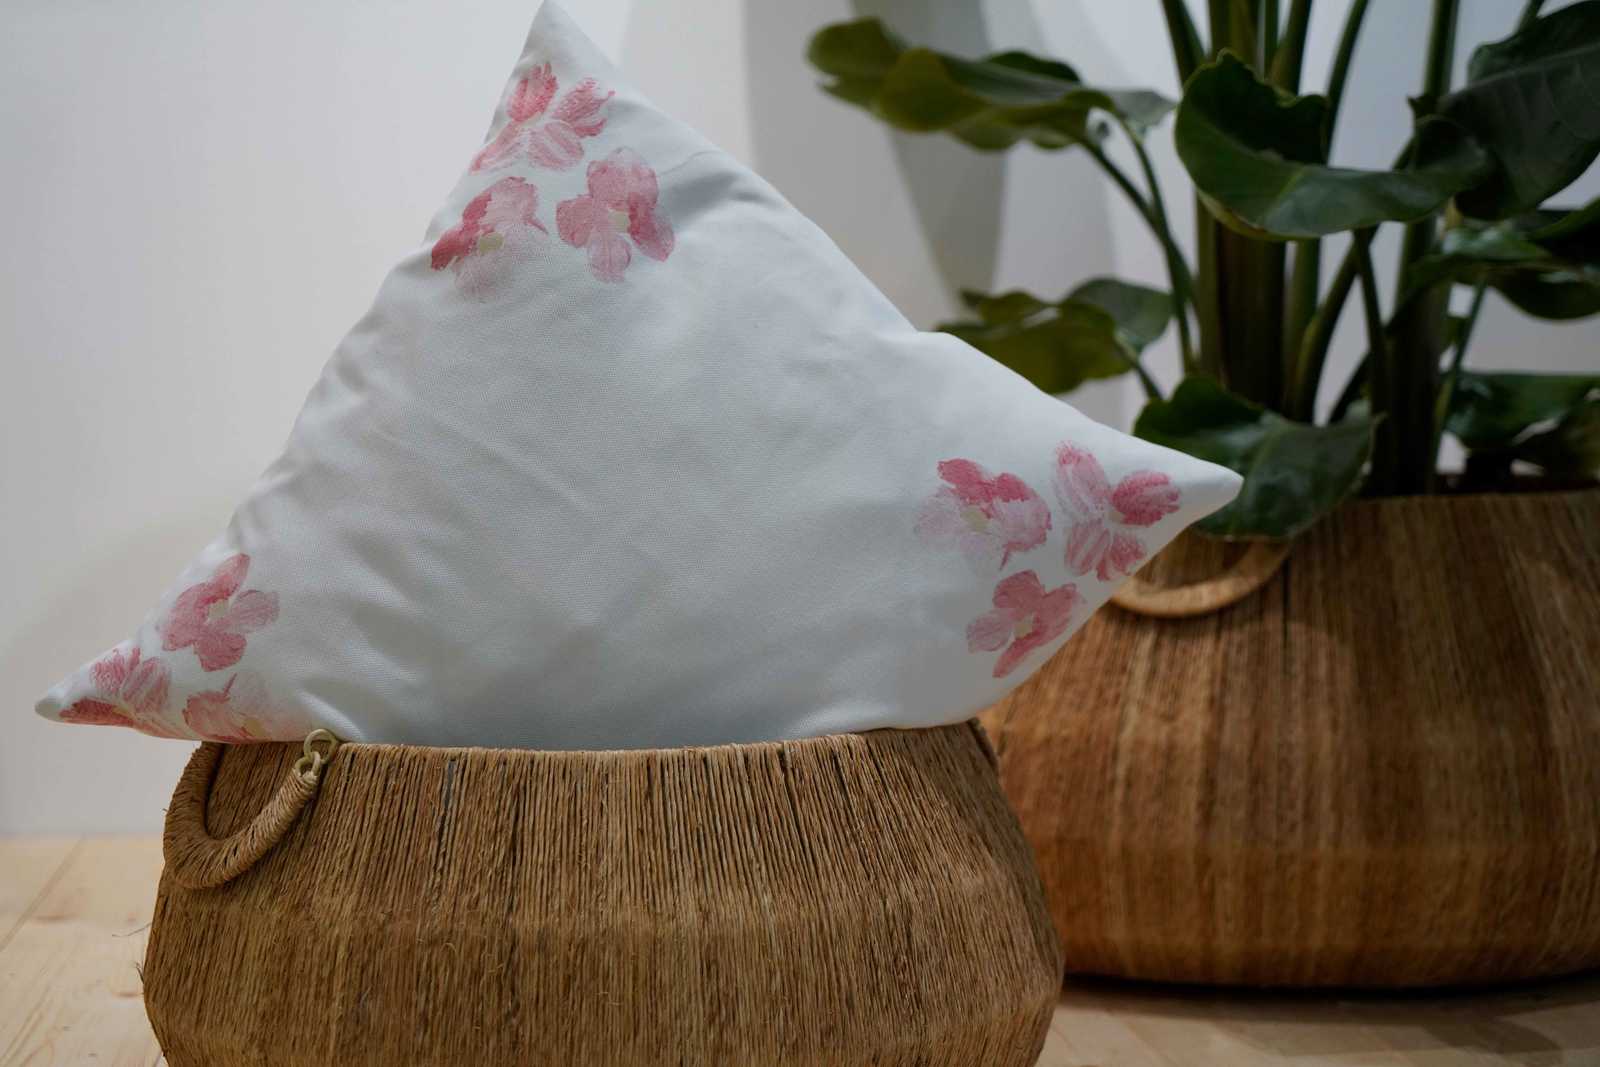             Cushion Cover White "Cherry Blossoms 4», 45x45cm
        